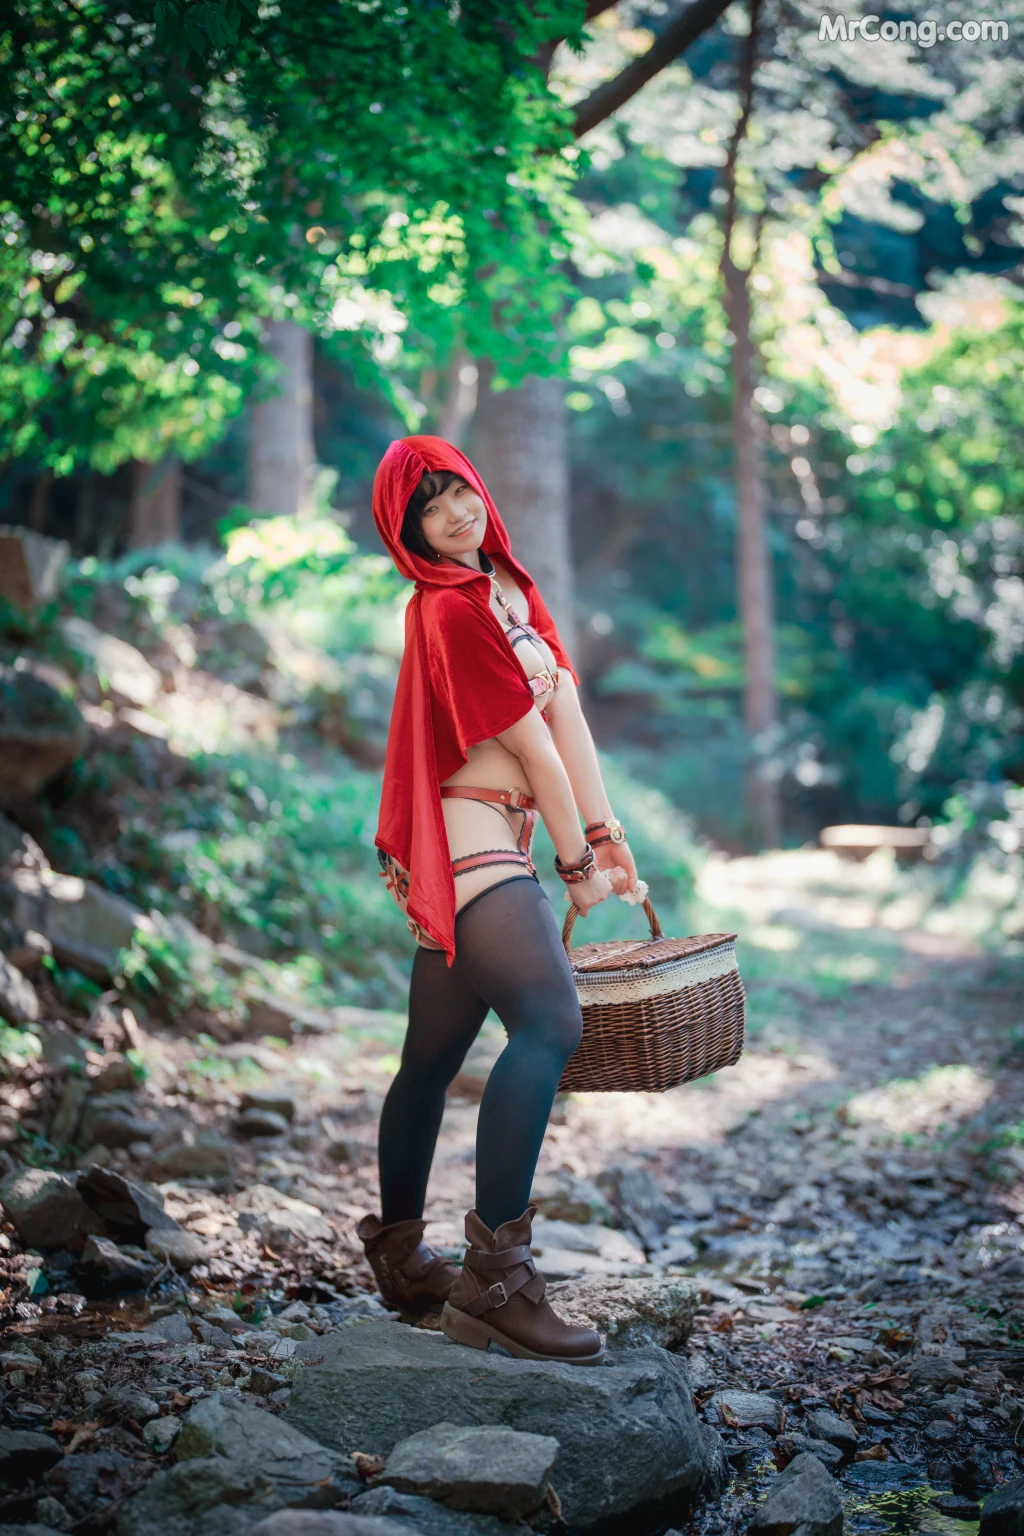 DJAWA Photo - Mimmi (밈미): "Naughty Red Hiring Hood" (125 photos) photo 4-14